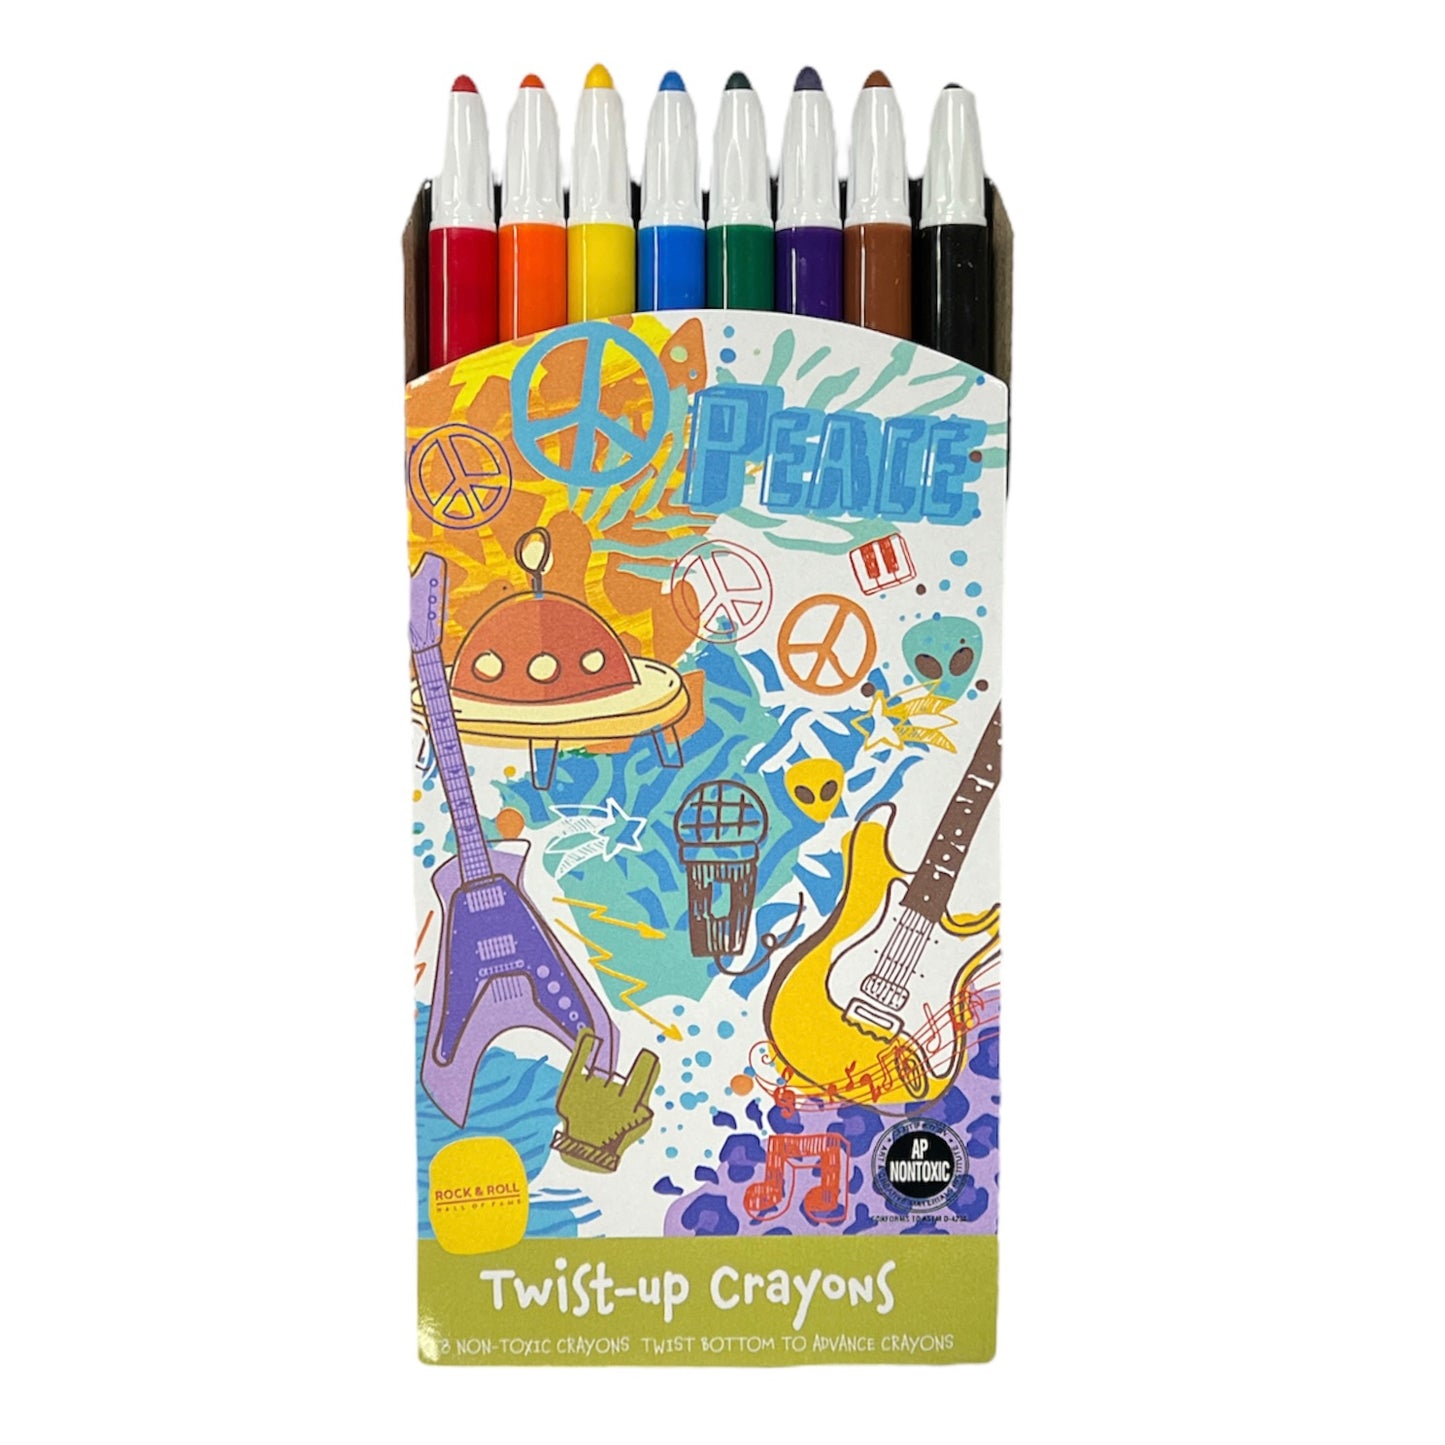 Twist-up Crayon